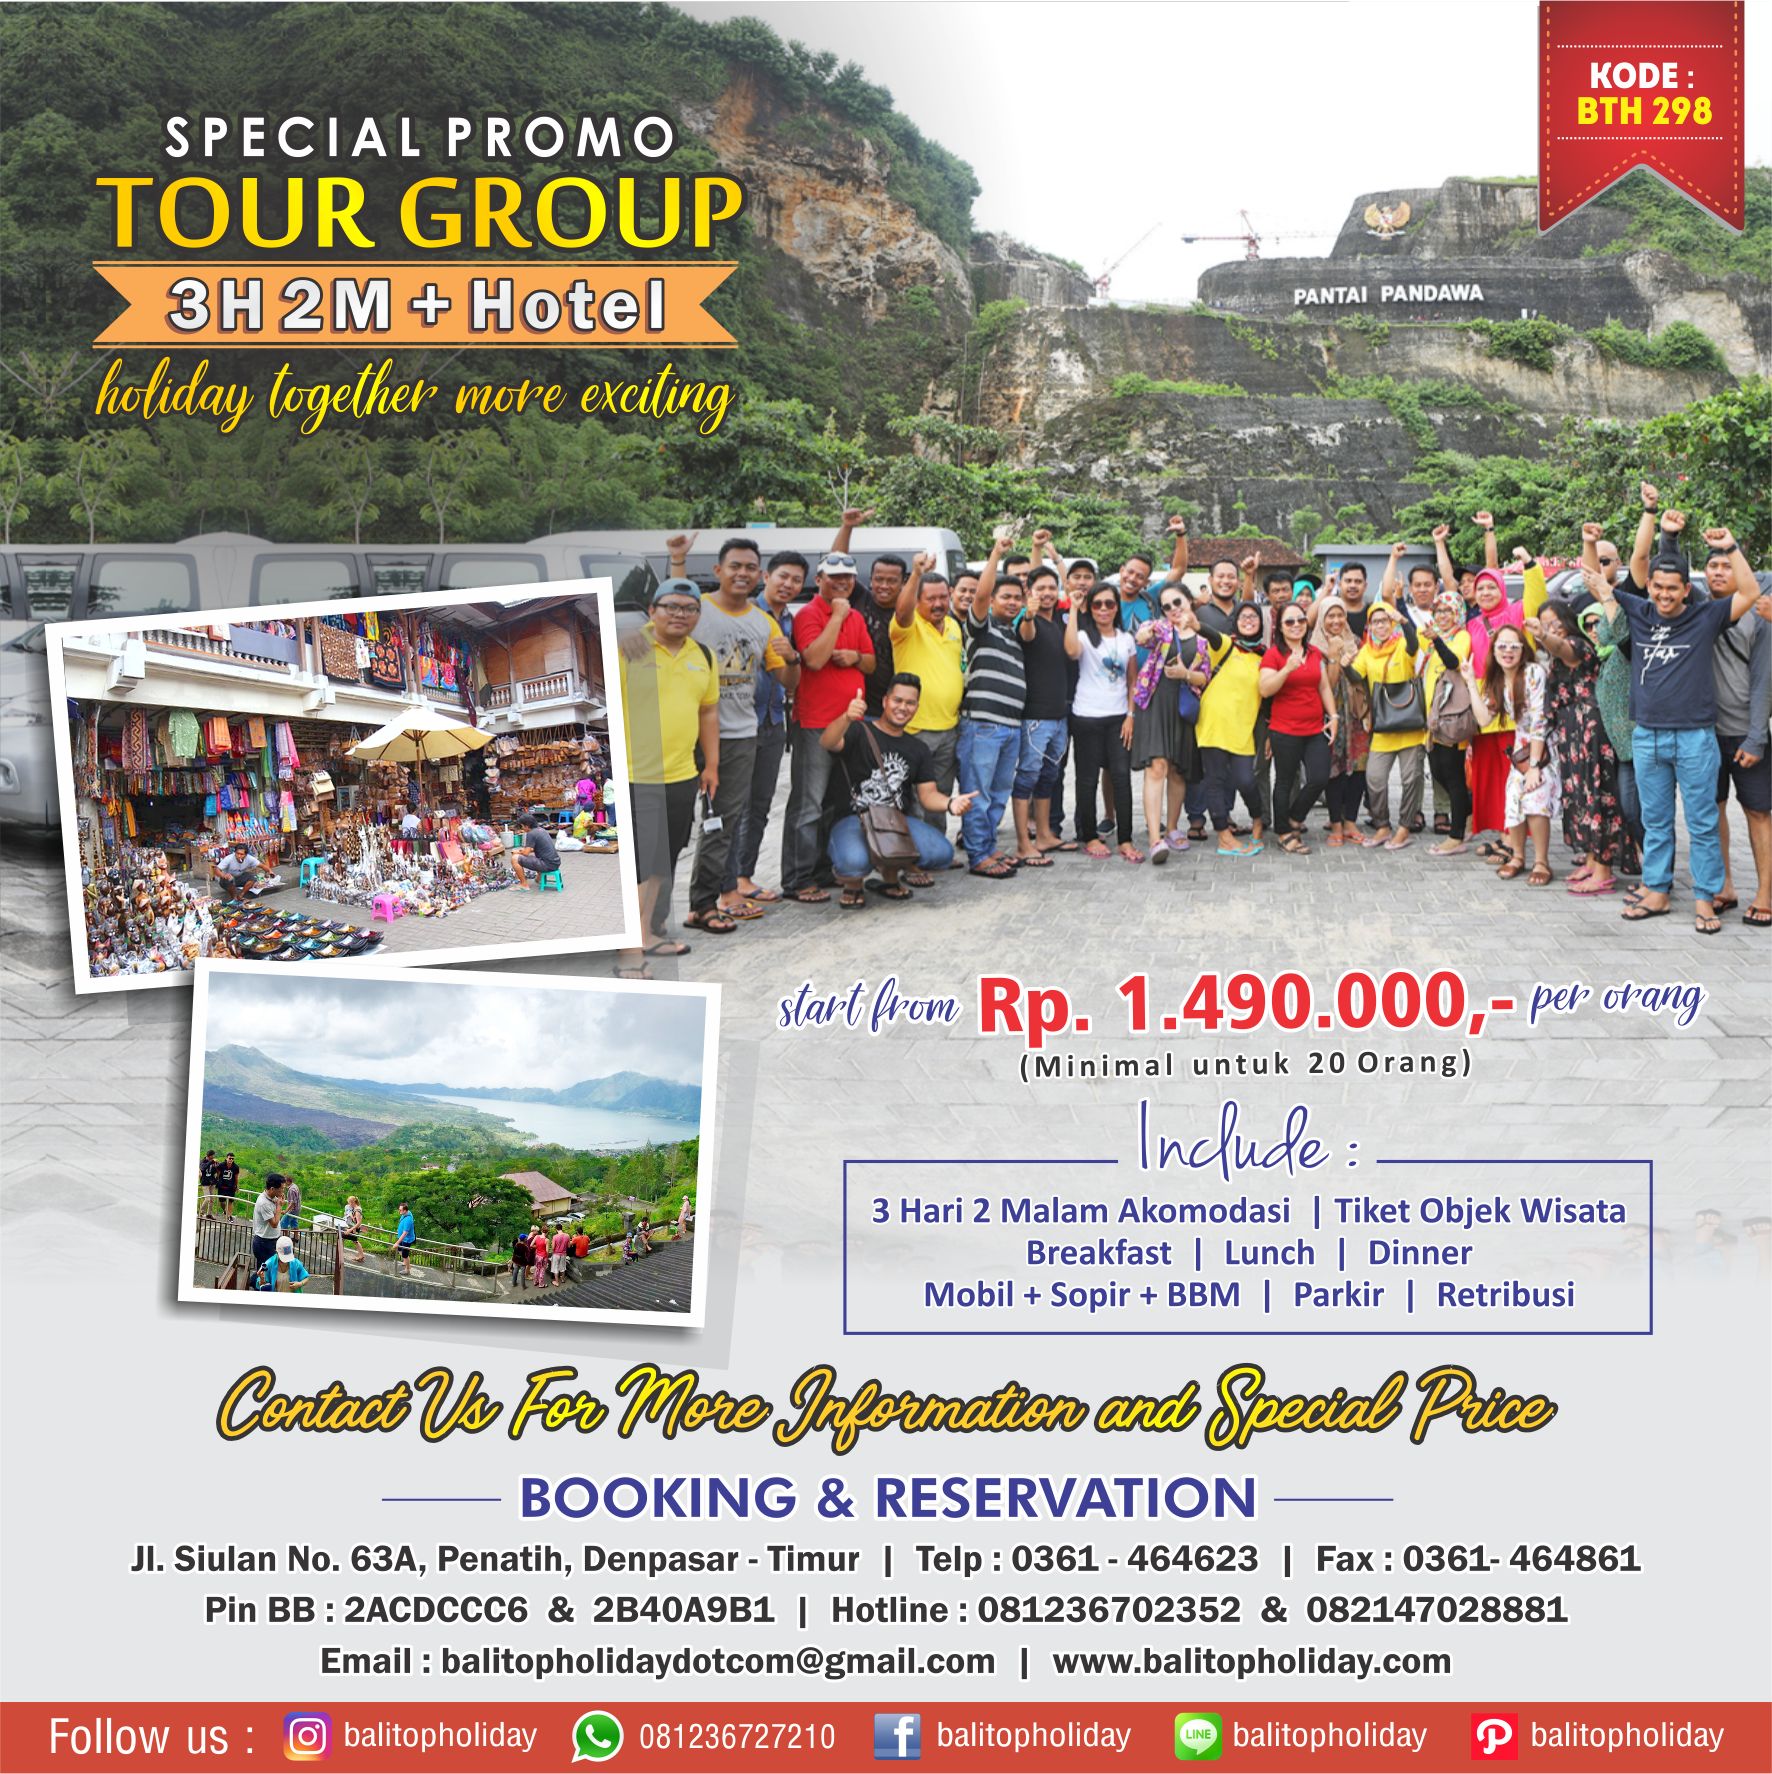 Paket tour group 3H 2M murah BTH 298